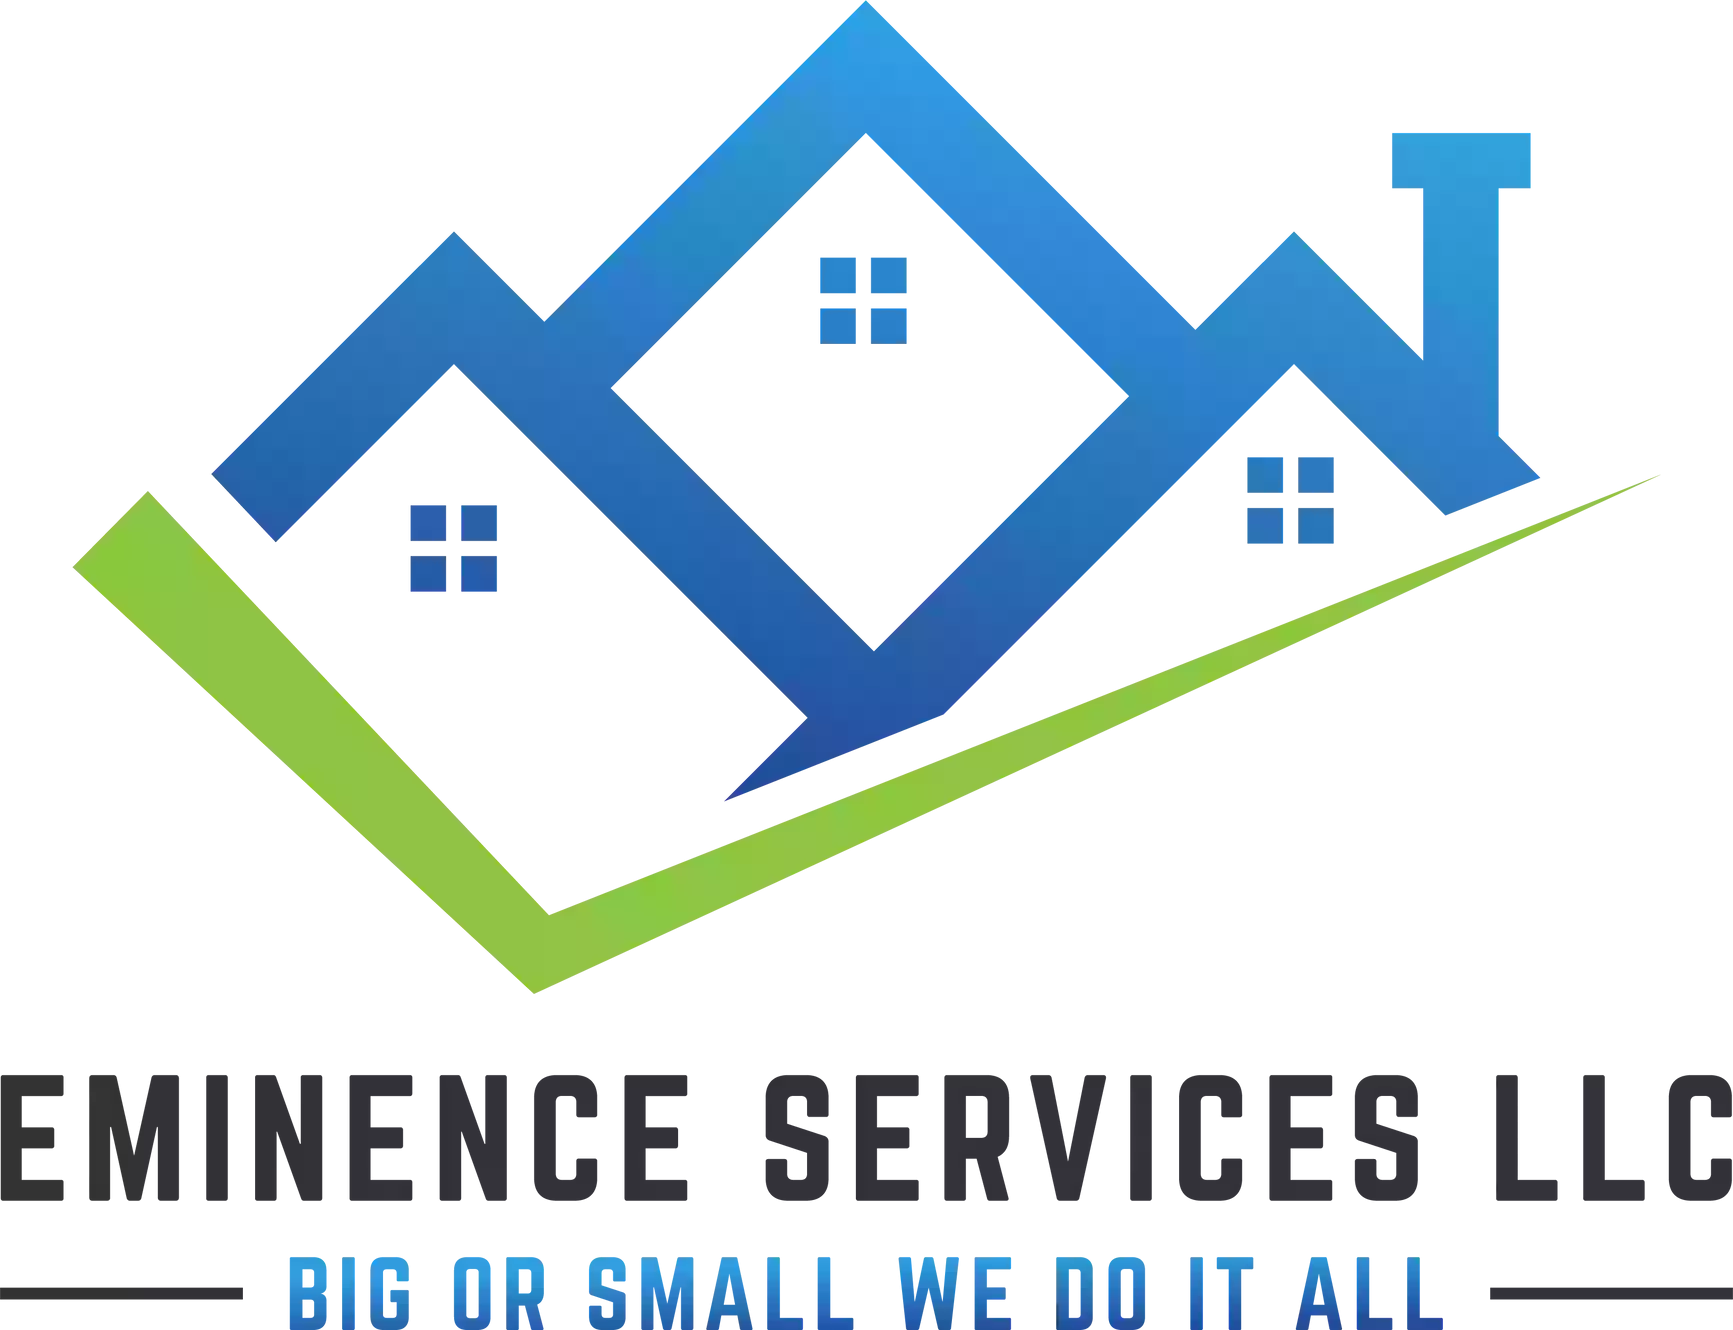 Eminence services LLC